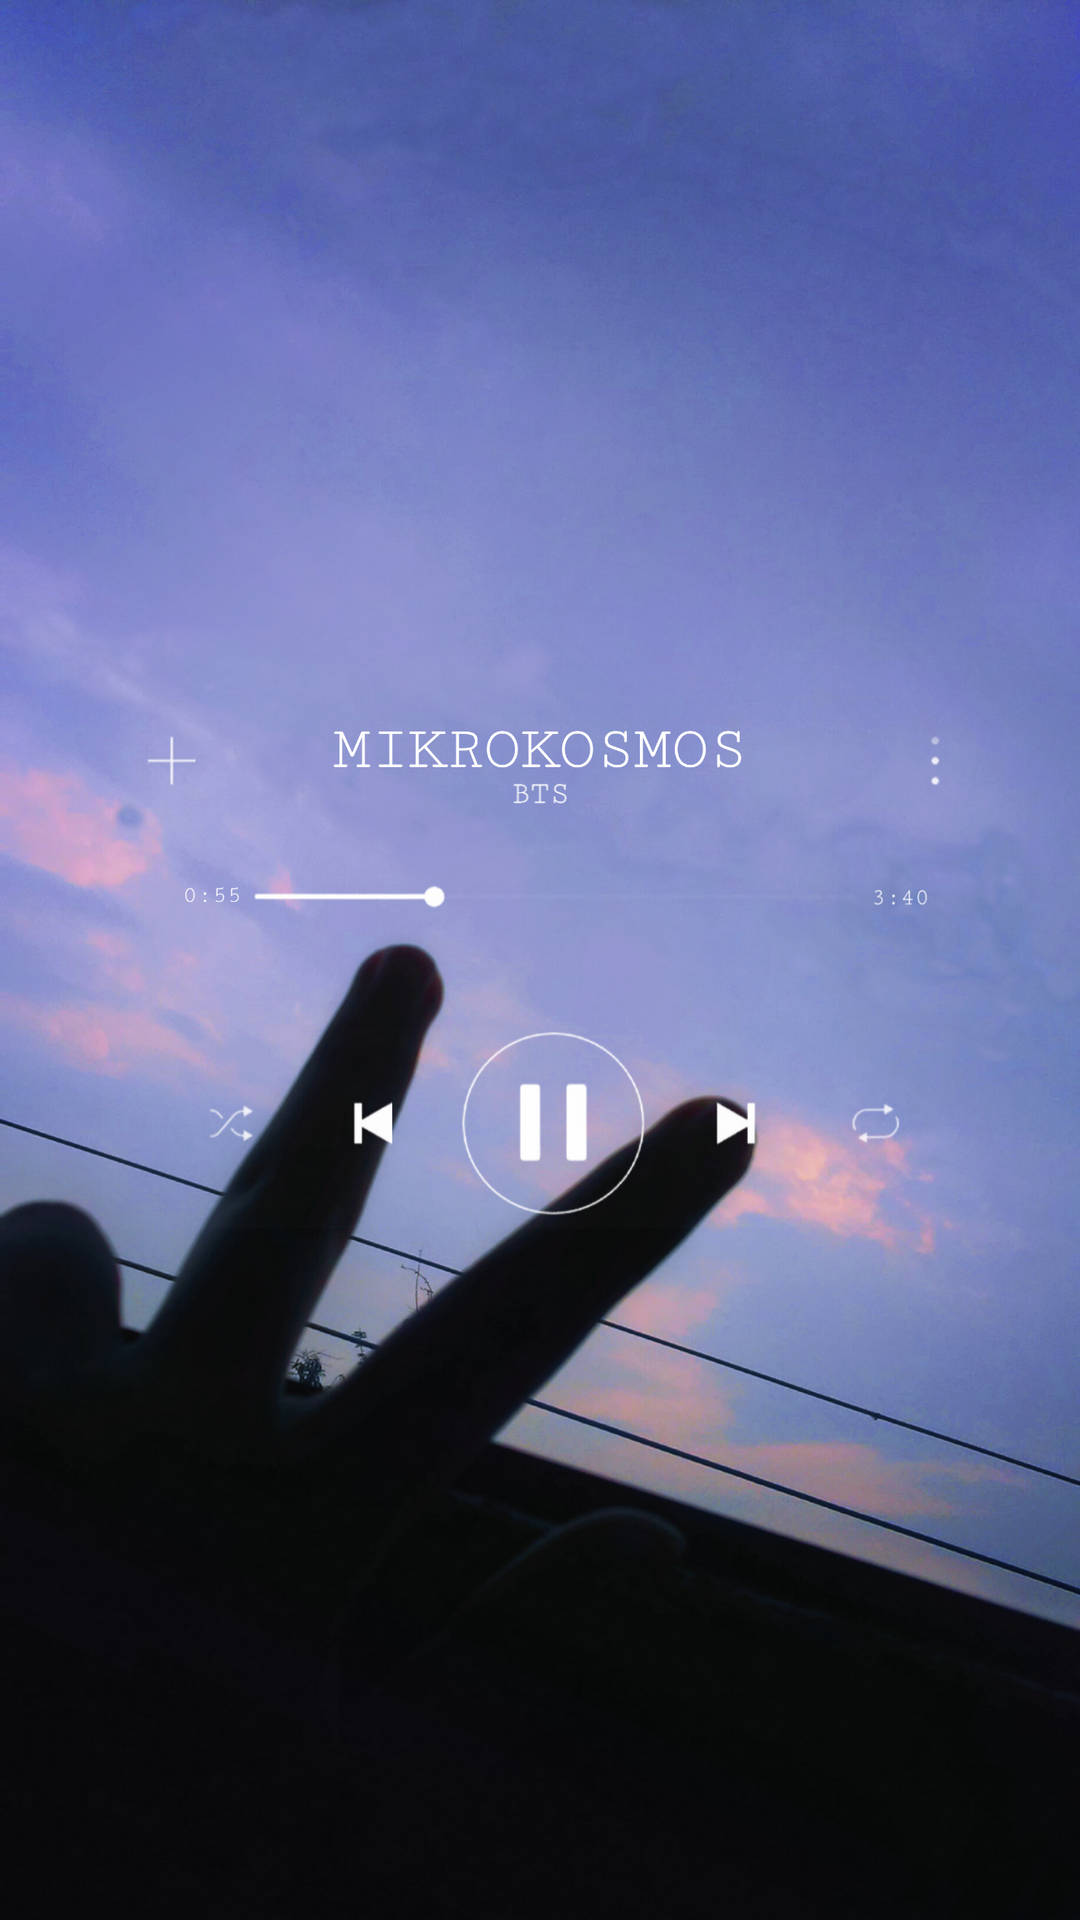 Download Music Aesthetic Mikrokosmos Bts Wallpaper 